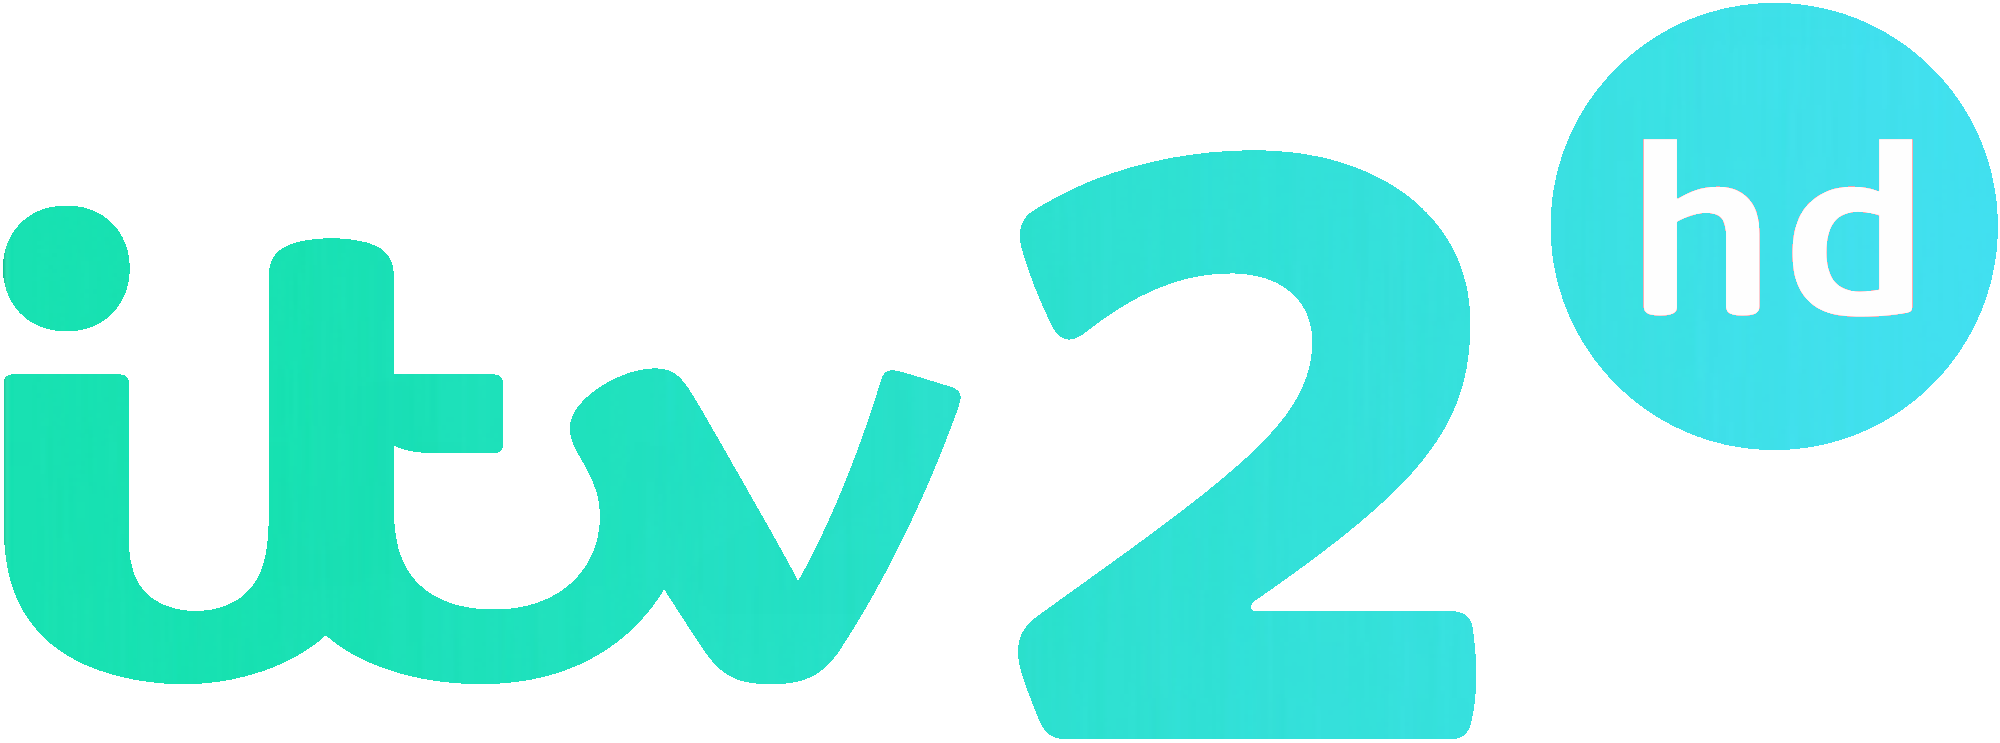 Itv2 Hd Logo PNG - 112432